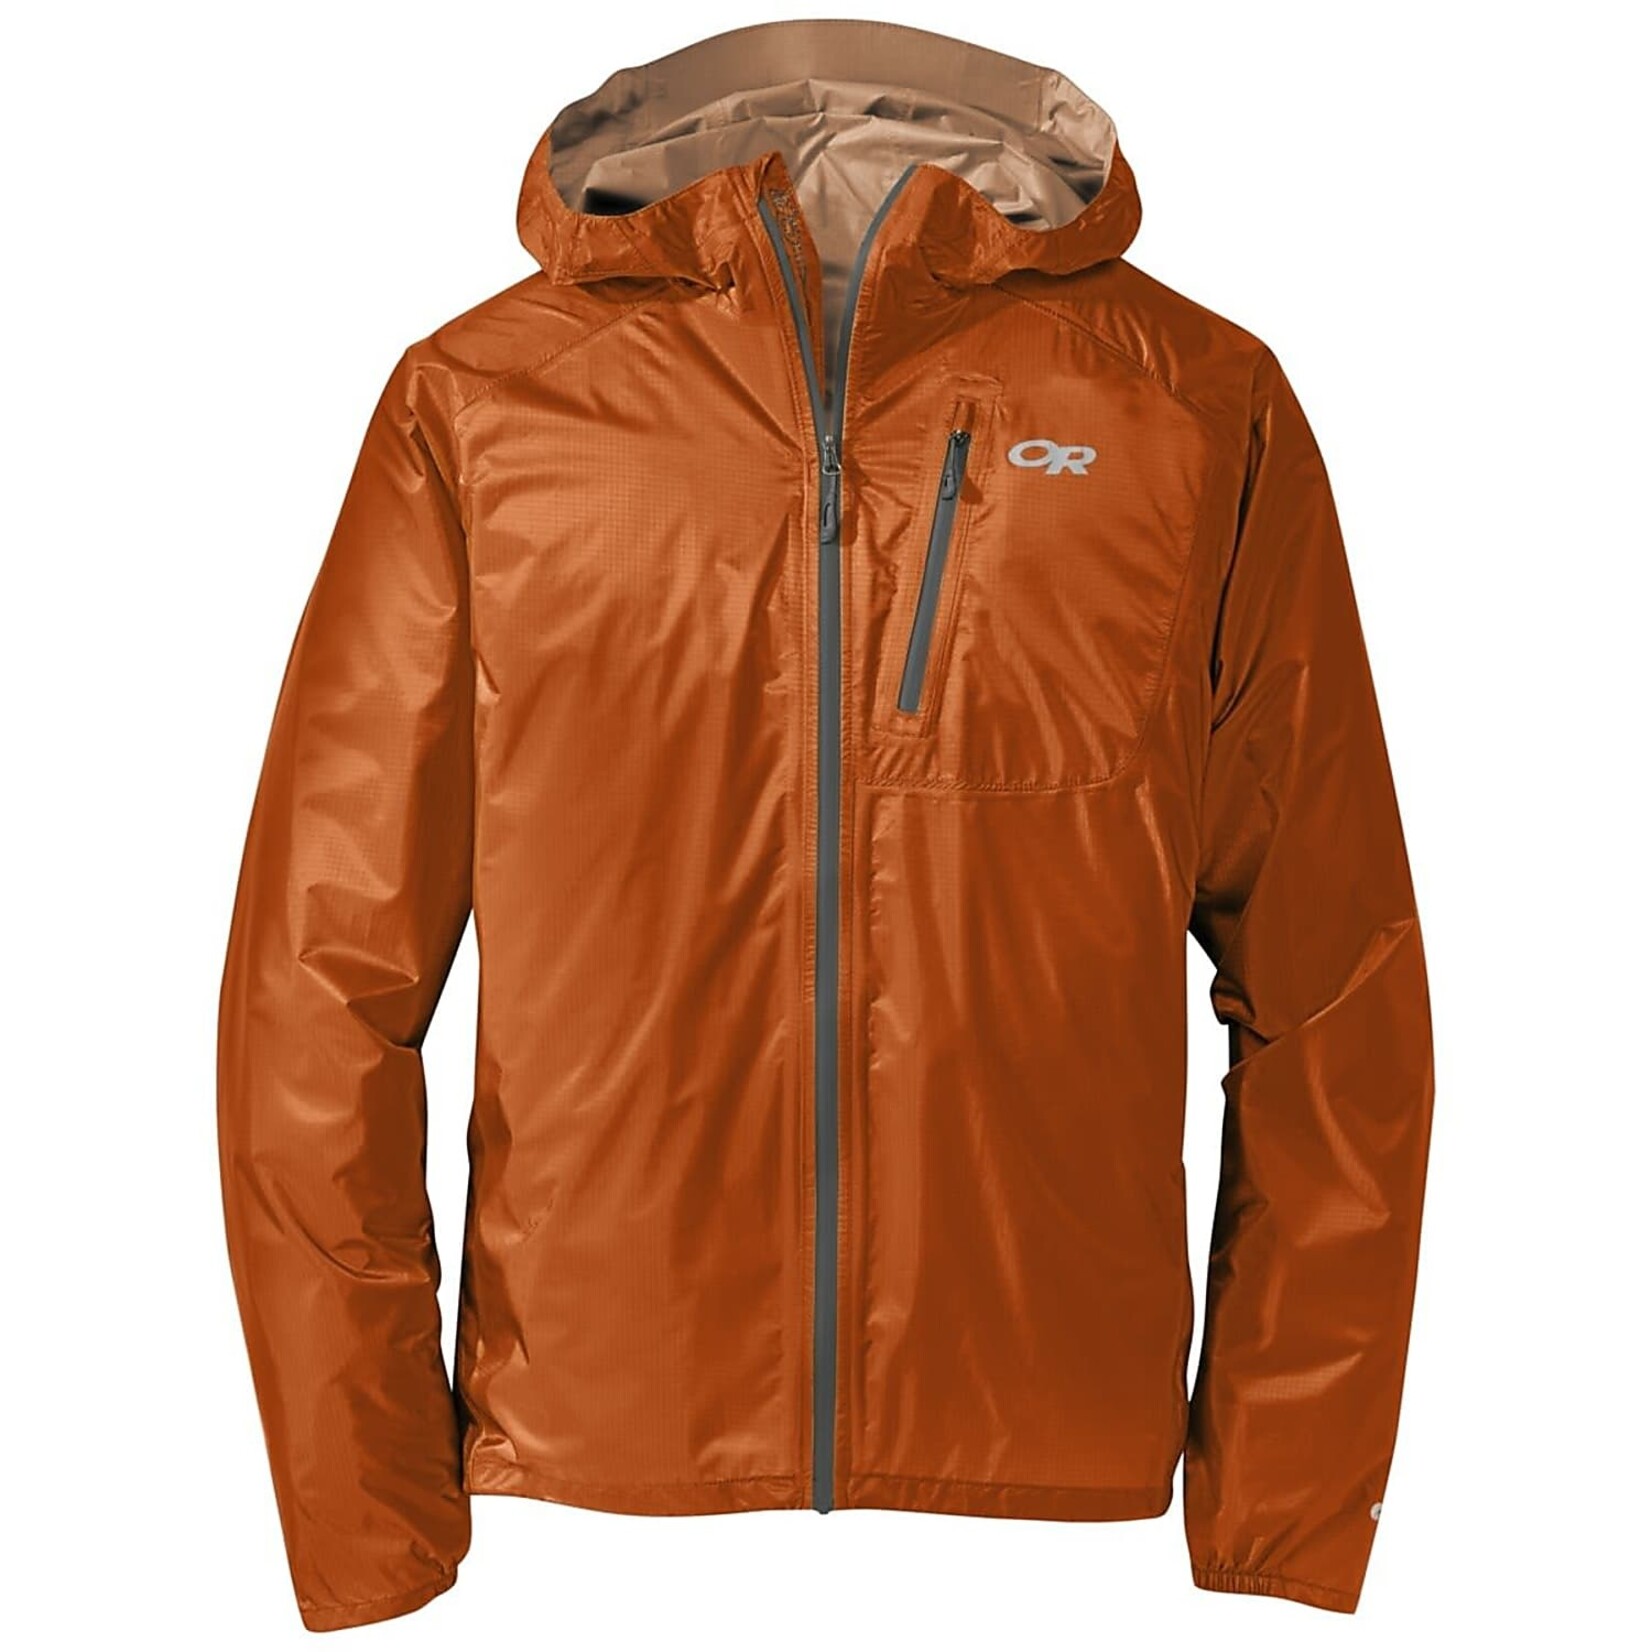 Outdoor Research Manteau Helium II Jacket pour hommes